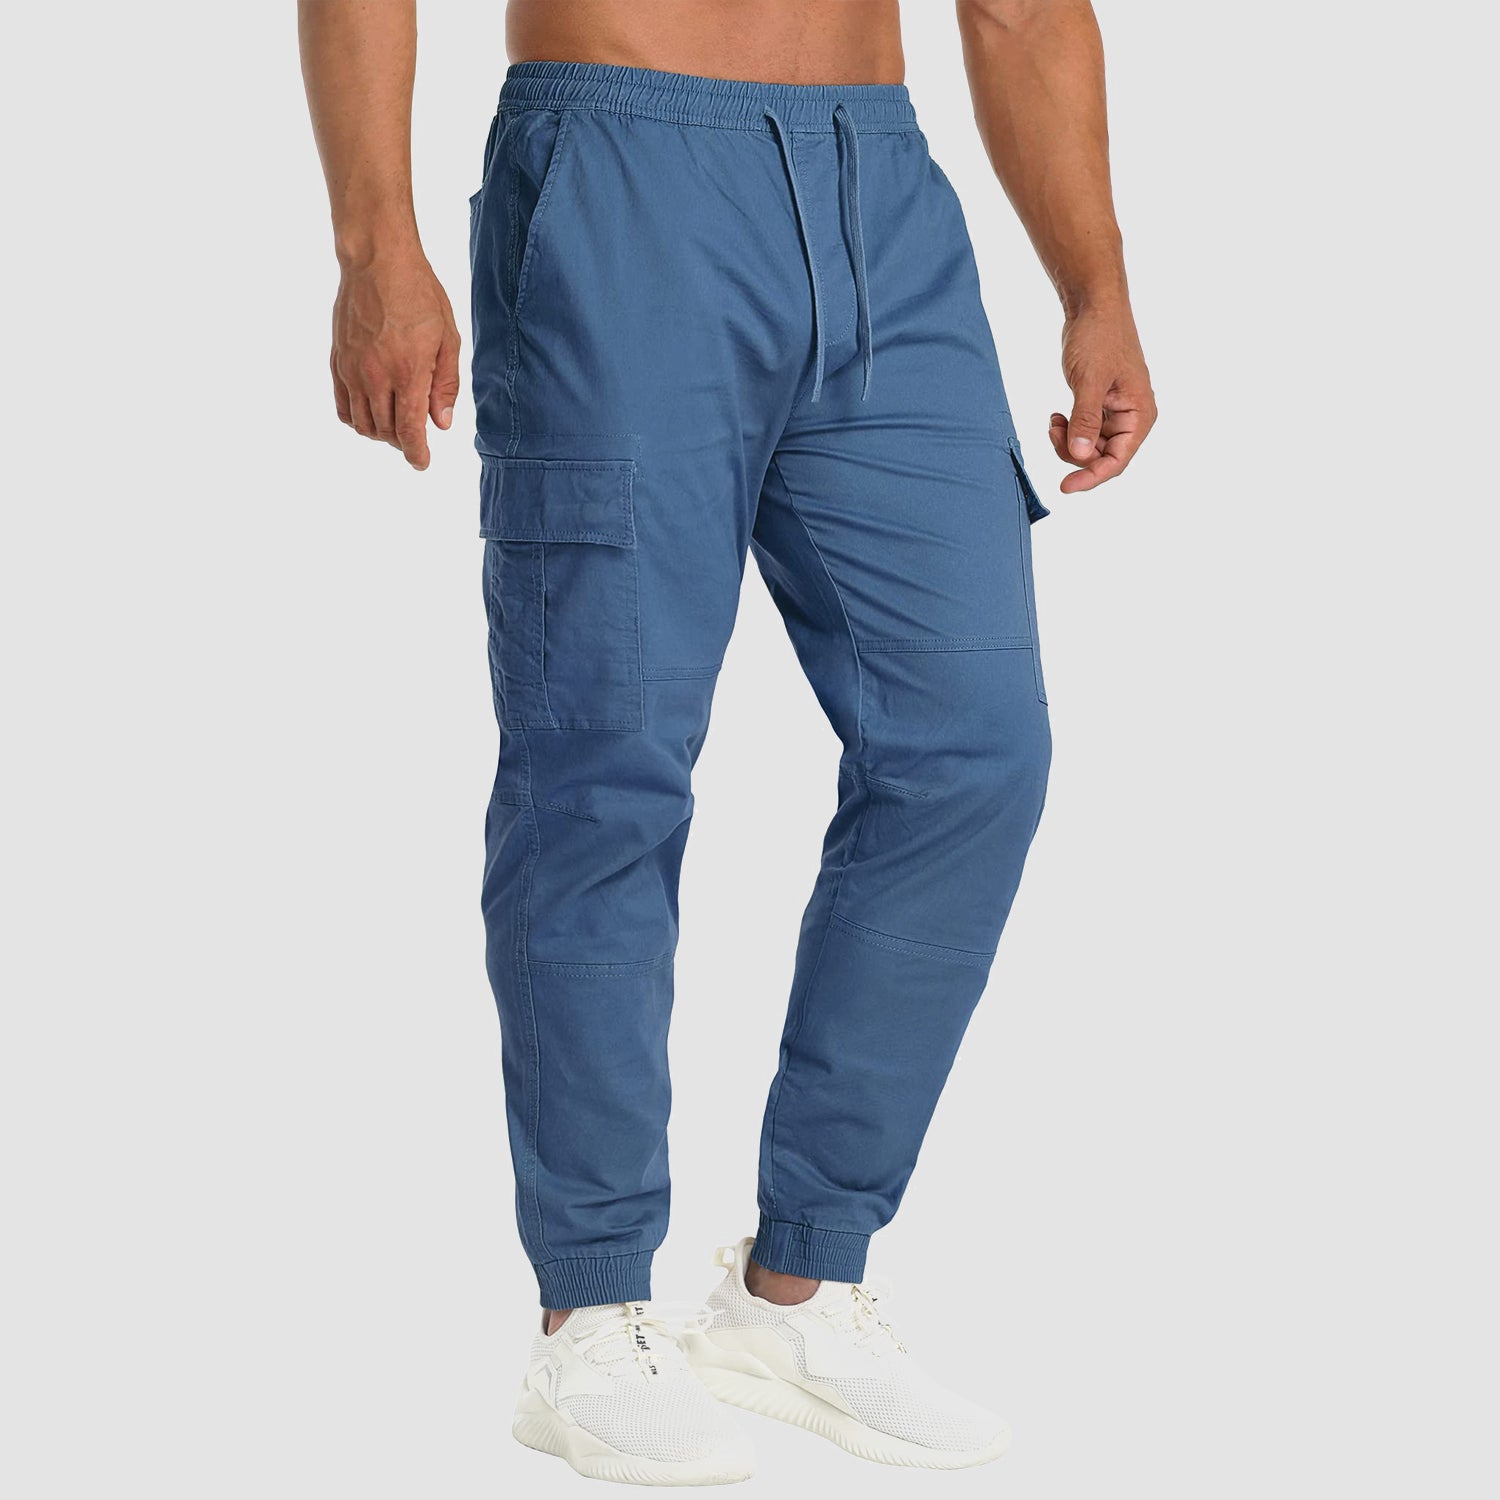 MAGCOMSEN Men's Cargo Pants Elastic Waist Quick Dry Trousers, Brick Red / 40